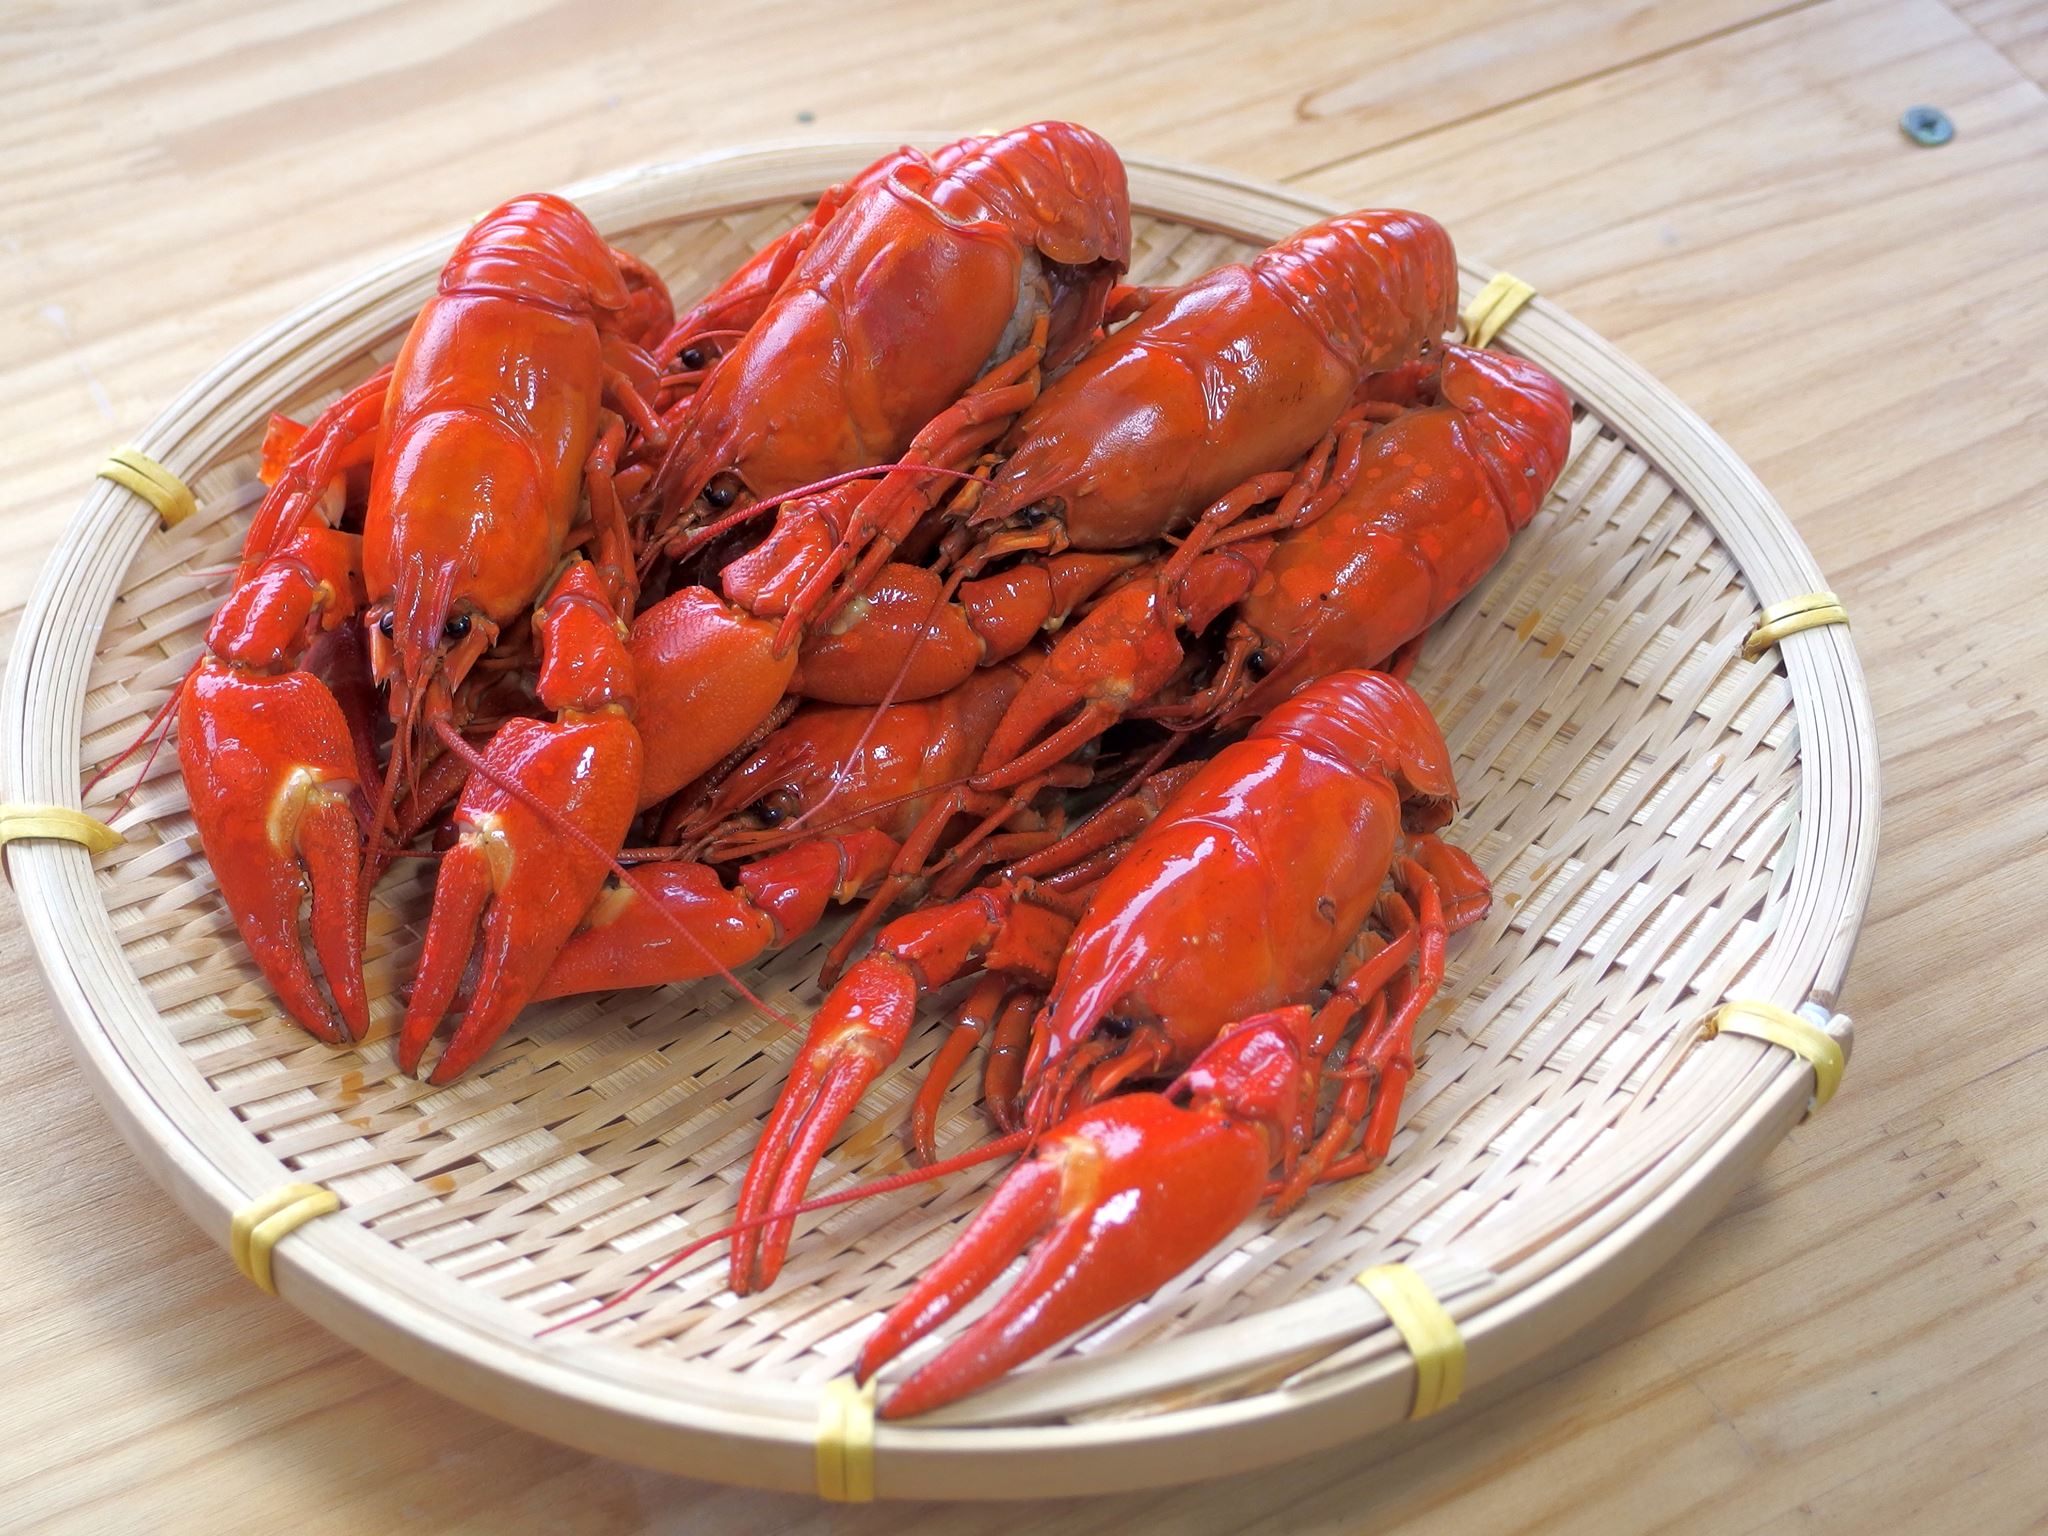 Hokkaido kani or crab is the best in Japan!